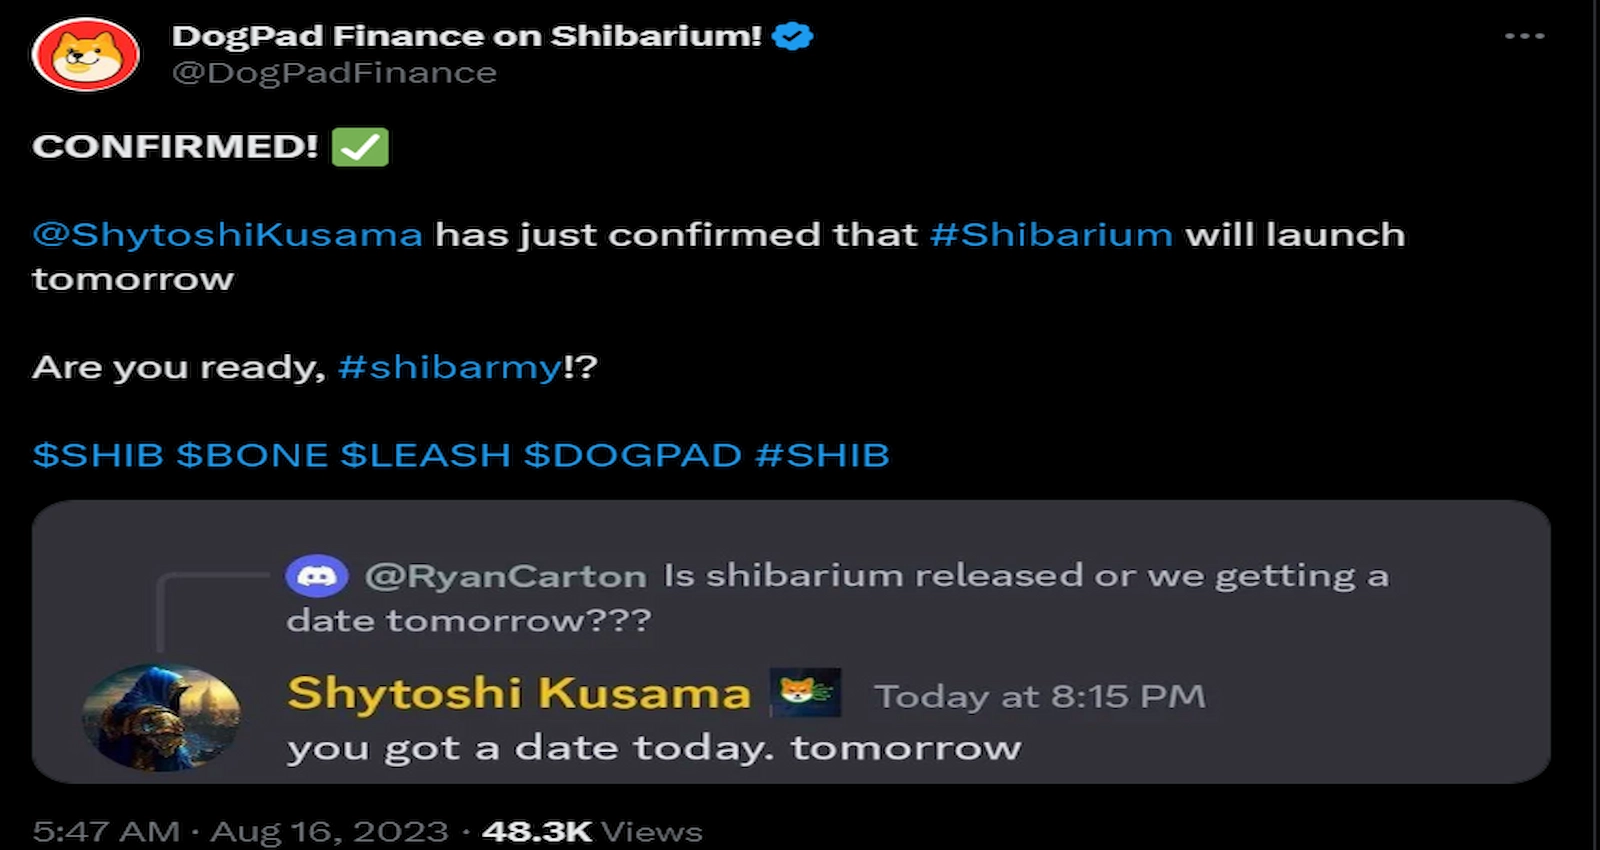 DogPad Finance claimed Shiba Inu developers could launch Shibarium on Aug 16.